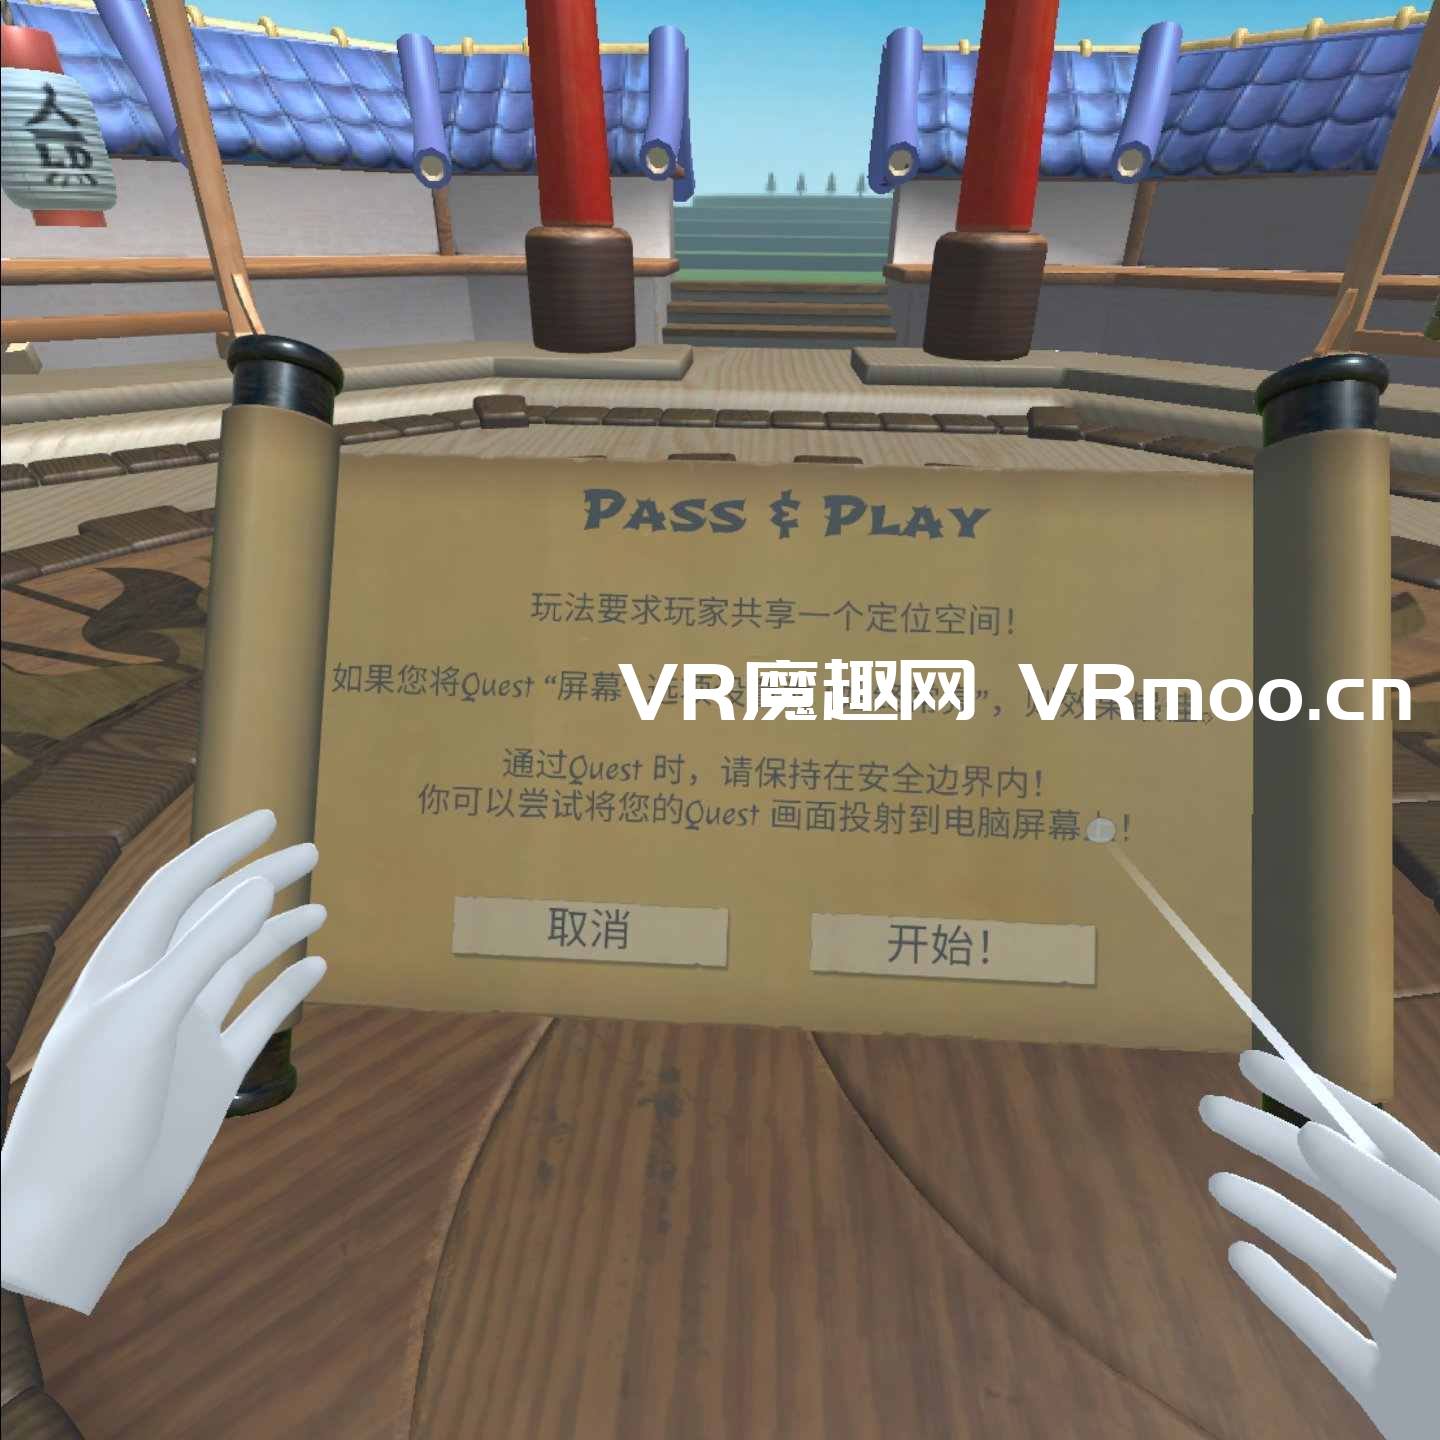 Oculus Quest 游戏《疯狂道场汉化中文版》Loco Dojo Unleashed VR